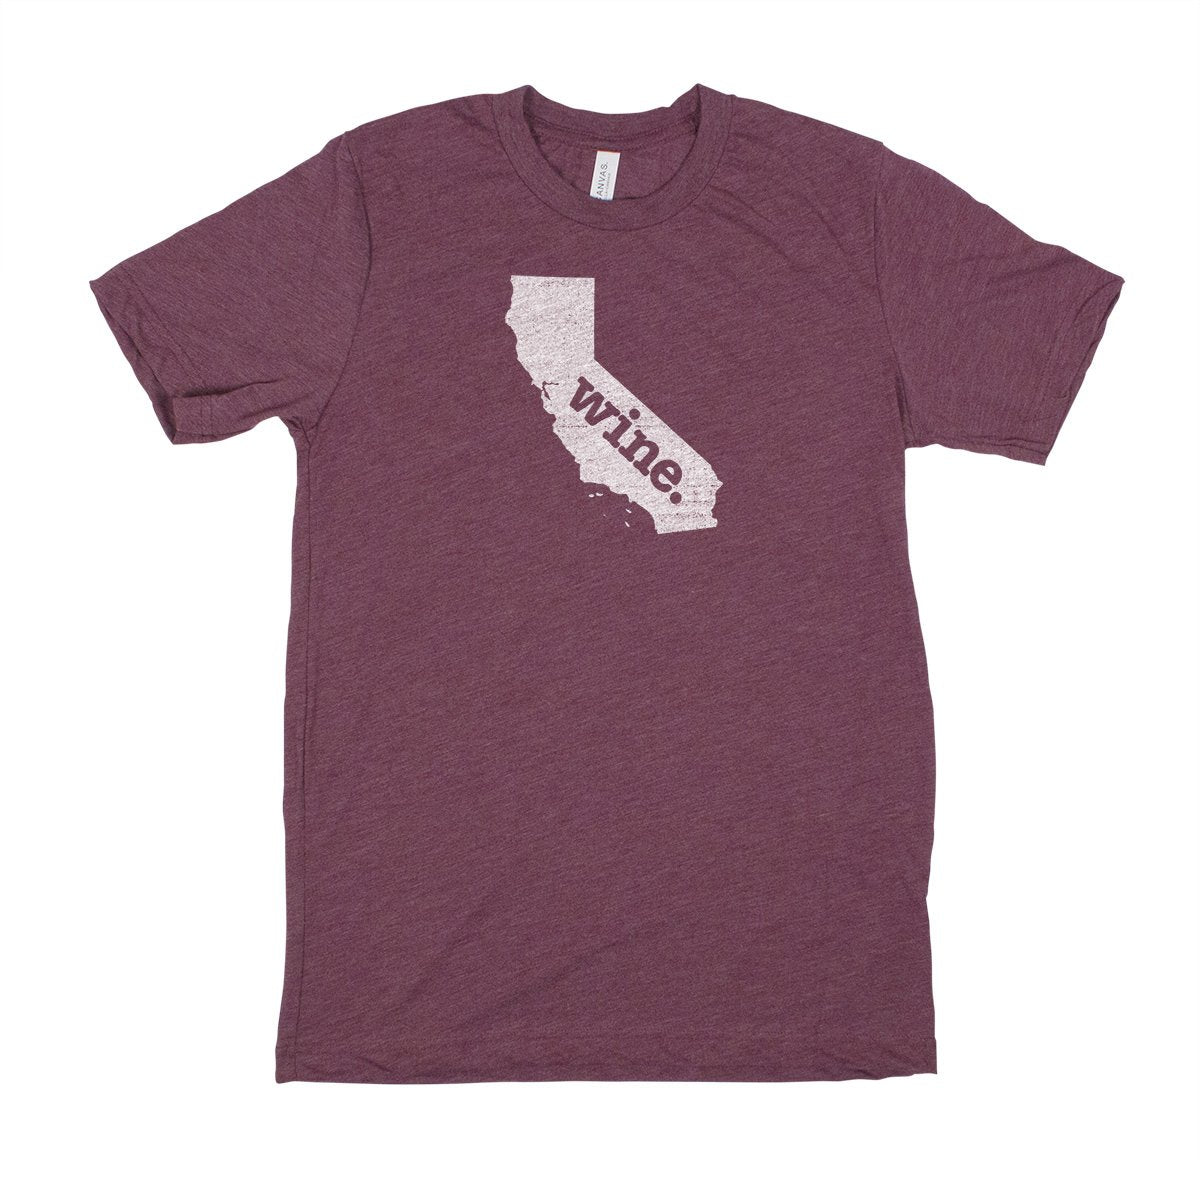 hike. Men's Unisex T-Shirt - Virginia